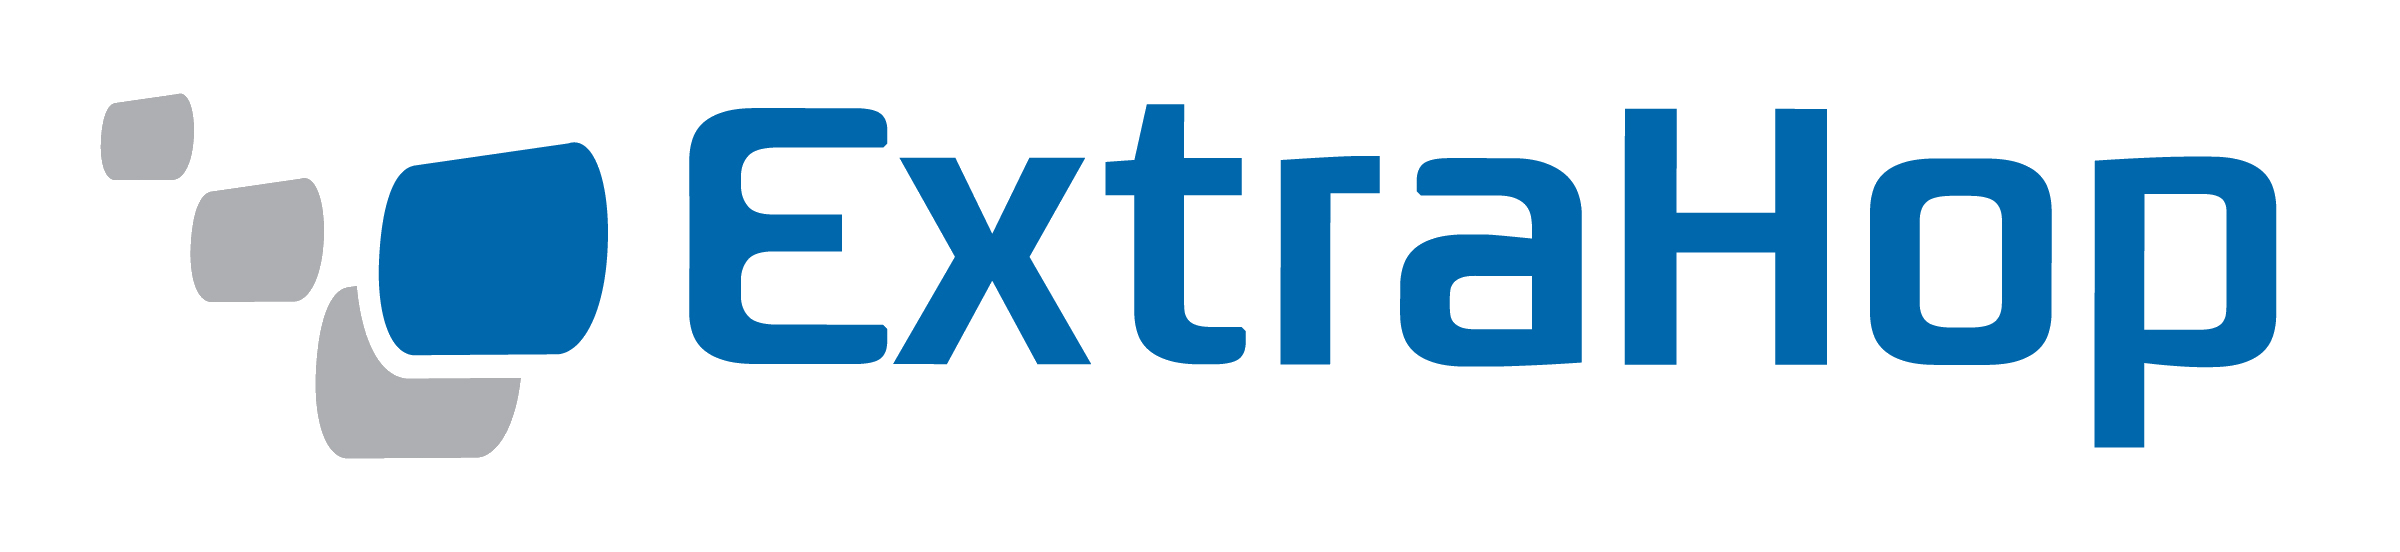 extrahop-logo-web.png